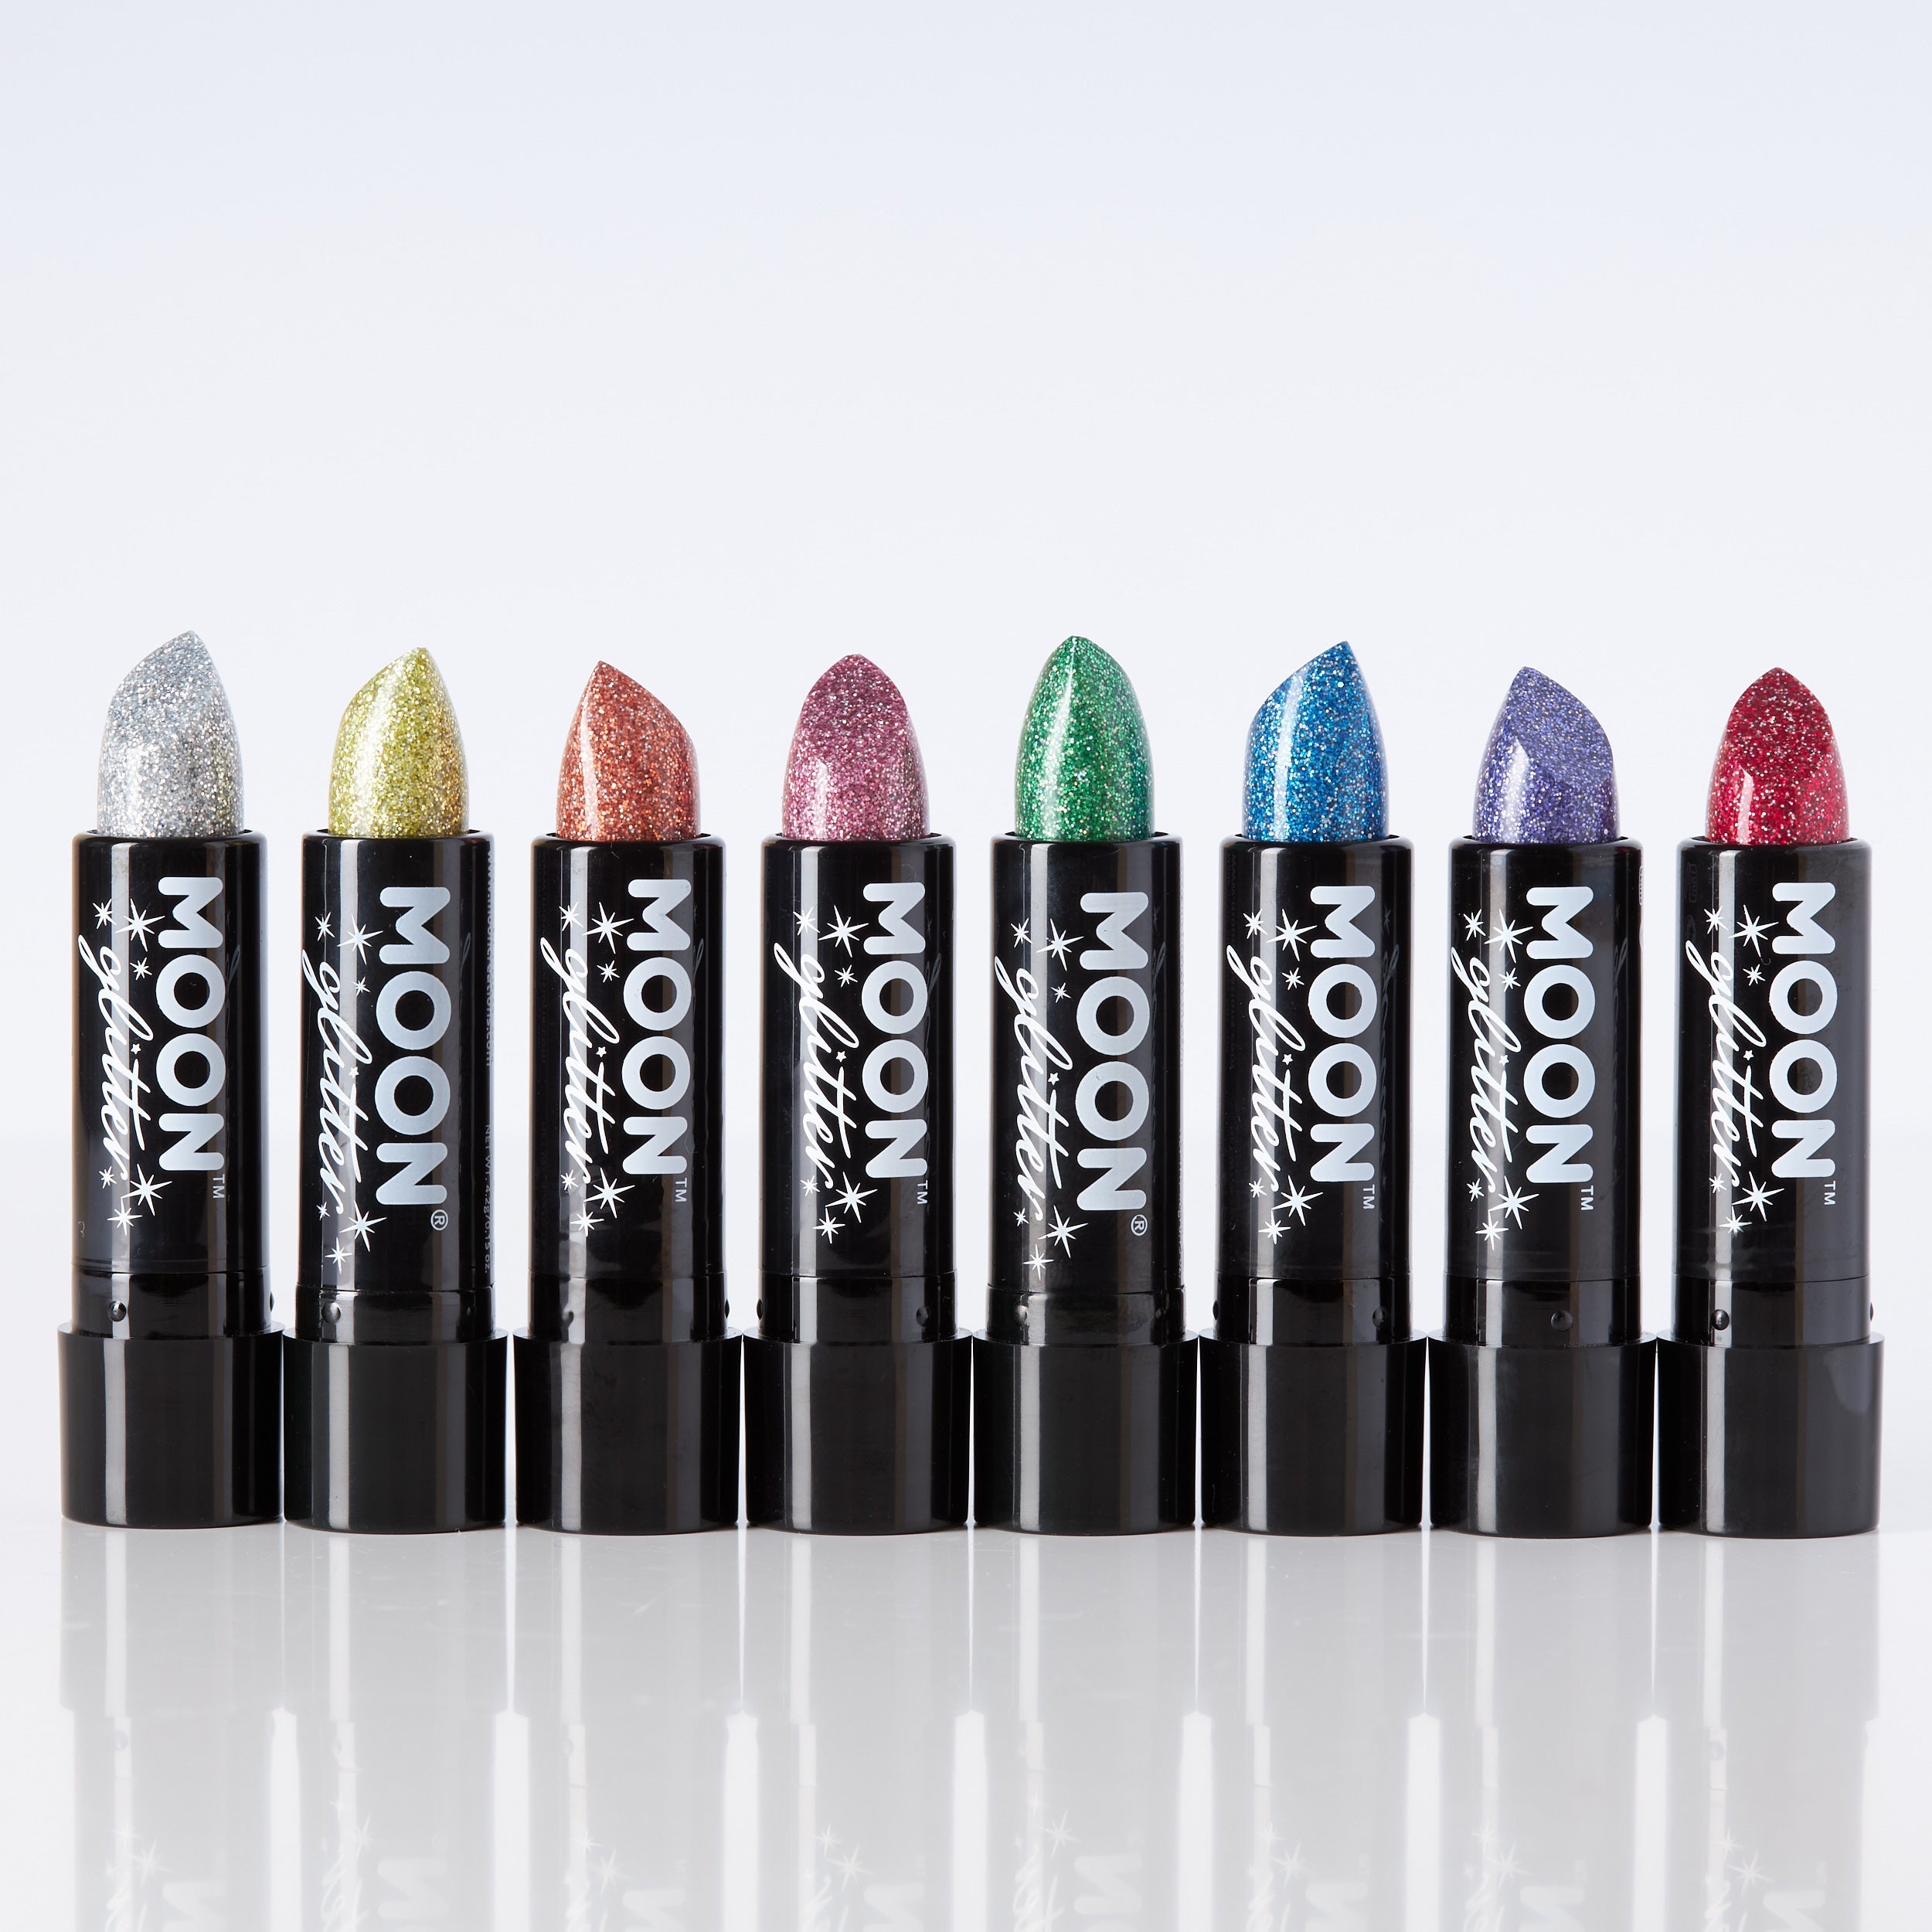 Holographic Glitter Lipstick. Cosmetically certified, FDA & Health Canada compliant and cruelty free.